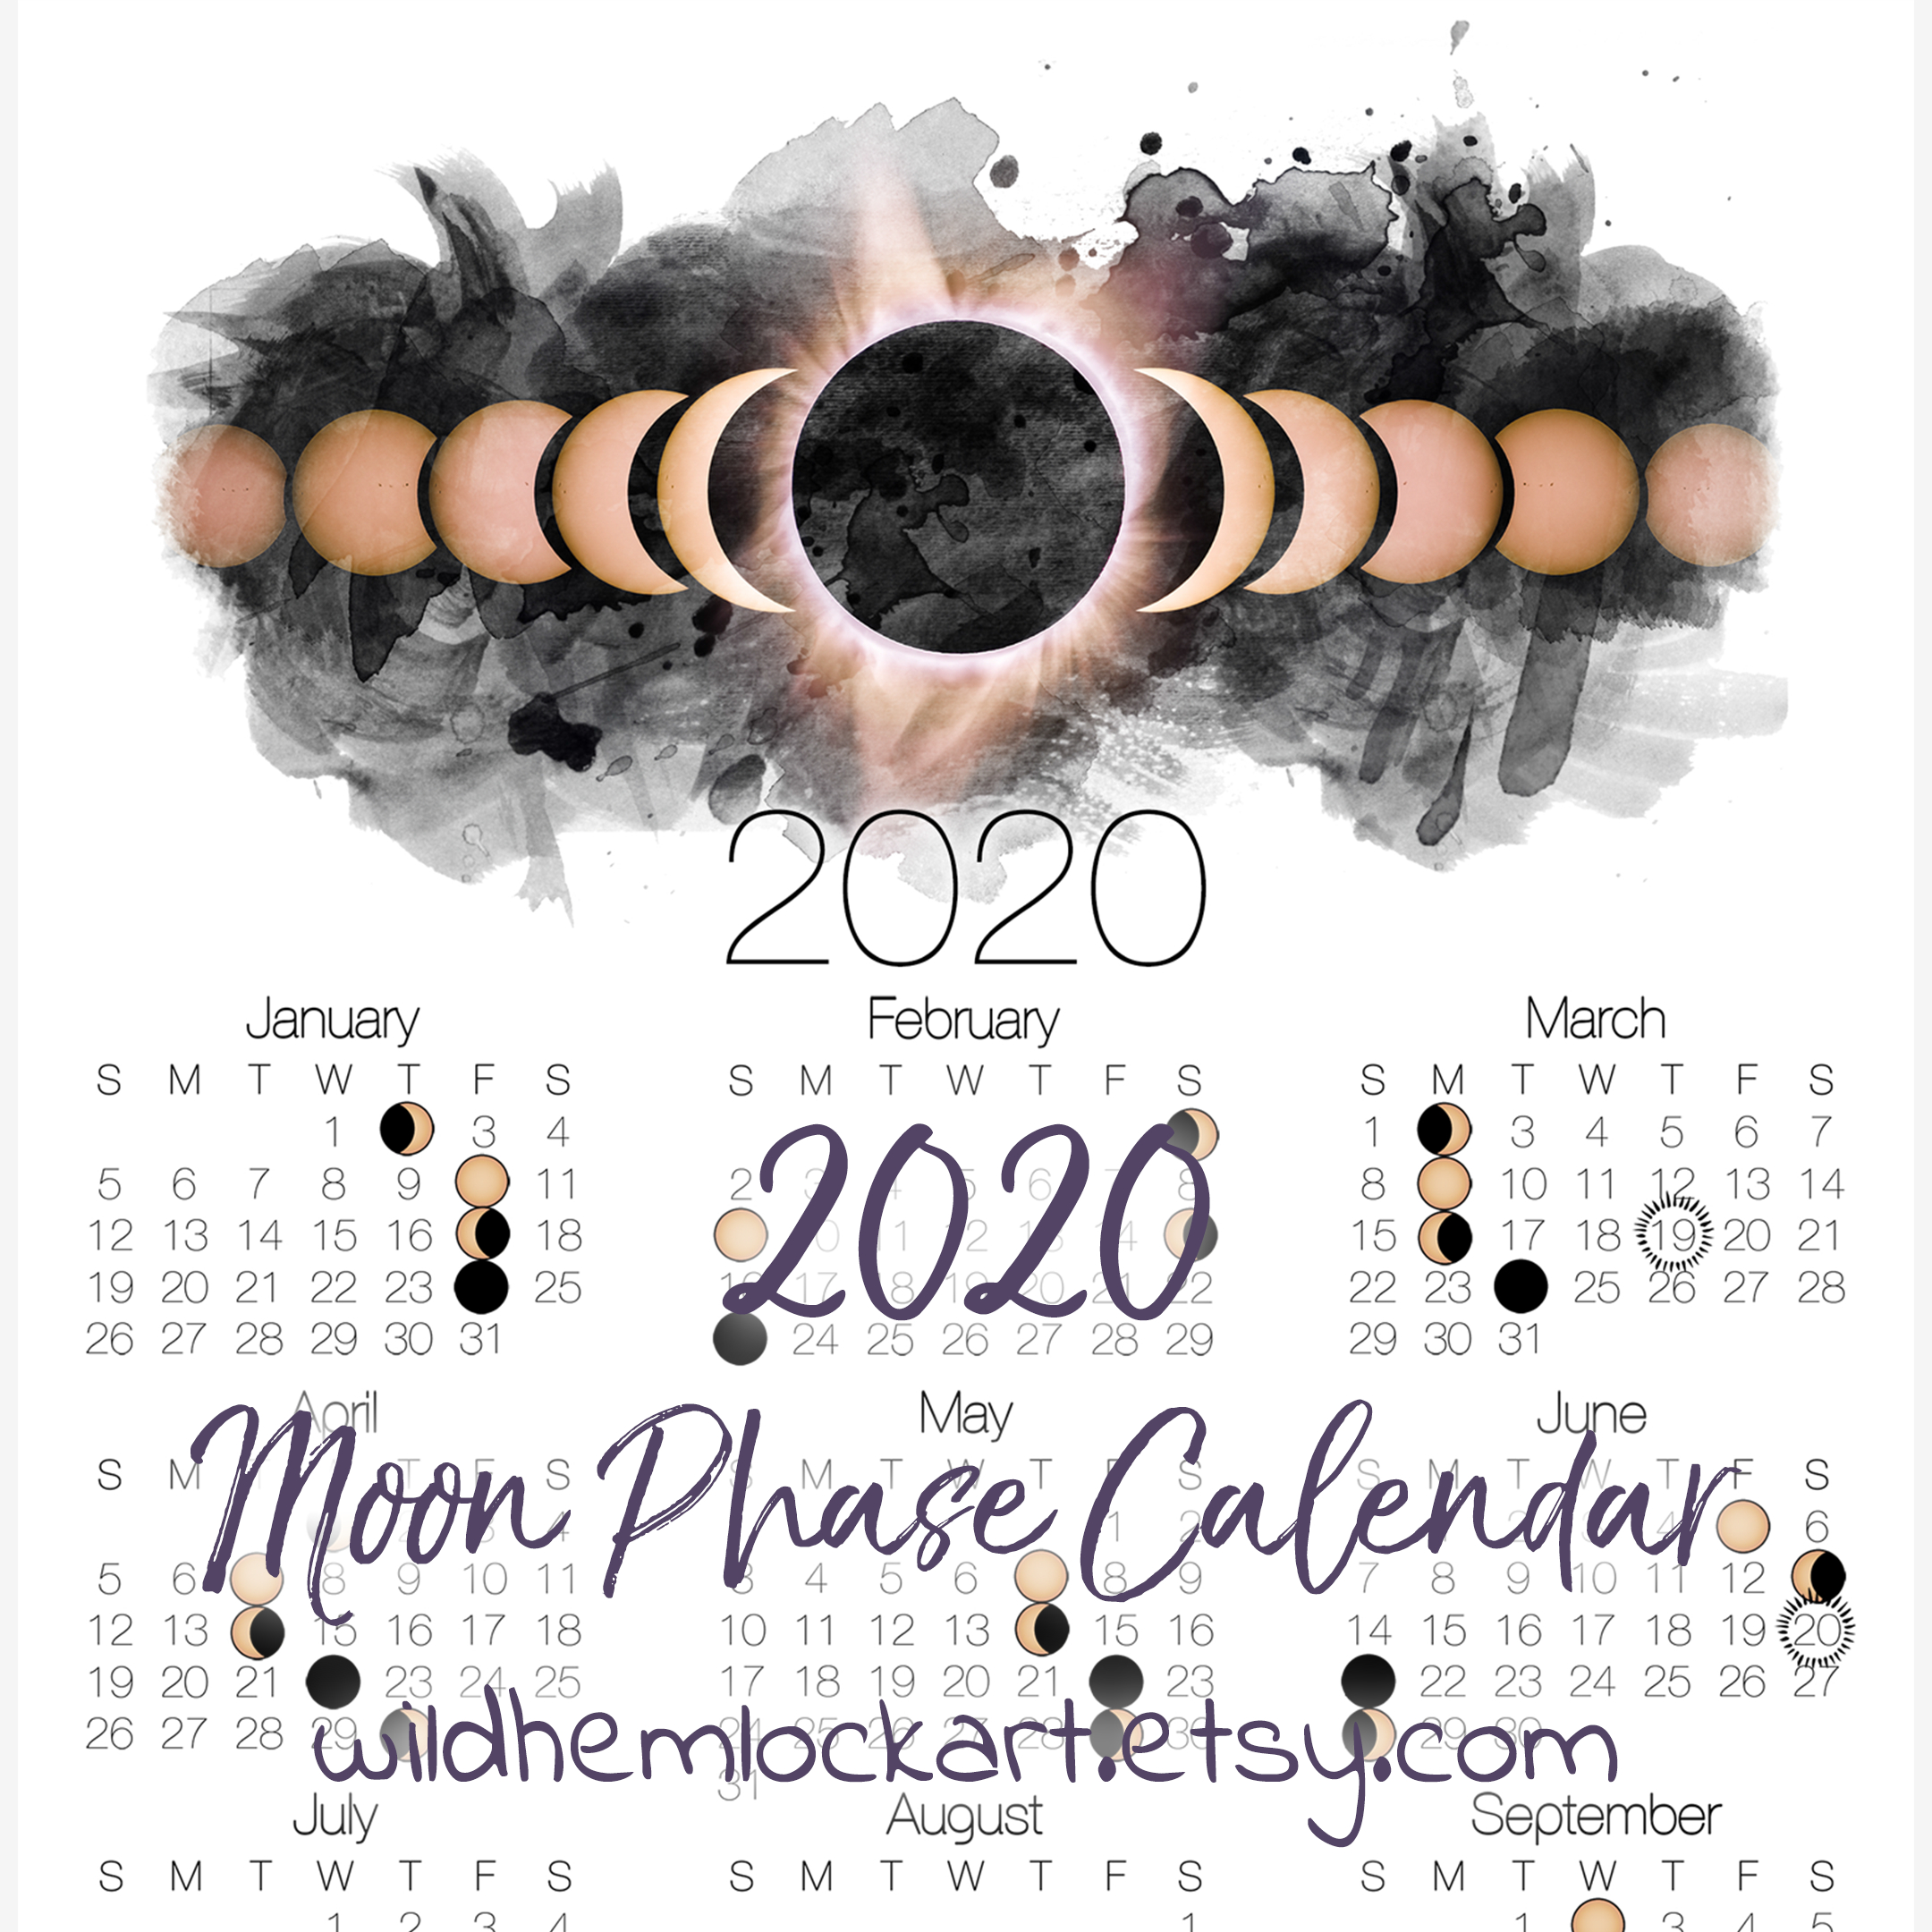 2020 Moon Phase Calendar  Lunar Calendar With Solar Eclipse throughout Om Lunar Calendar